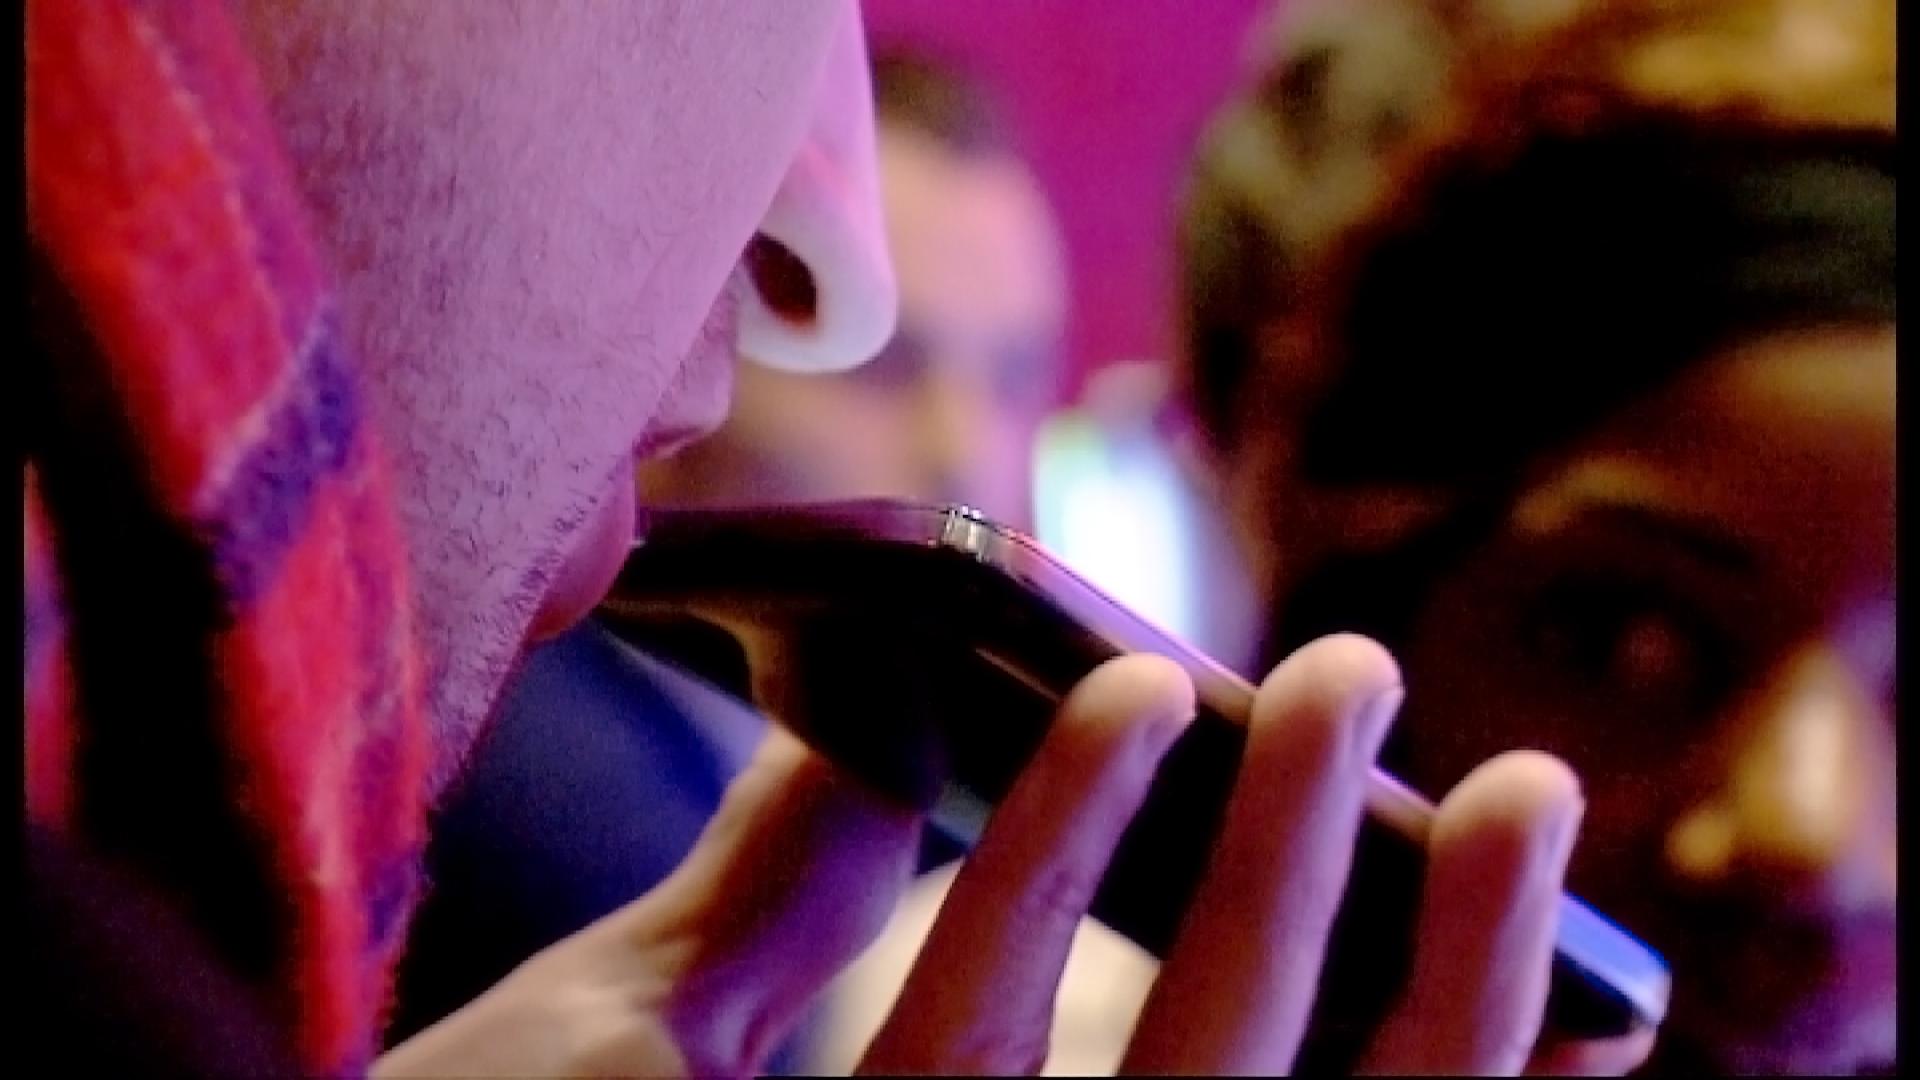 A man breathes into a smartphone